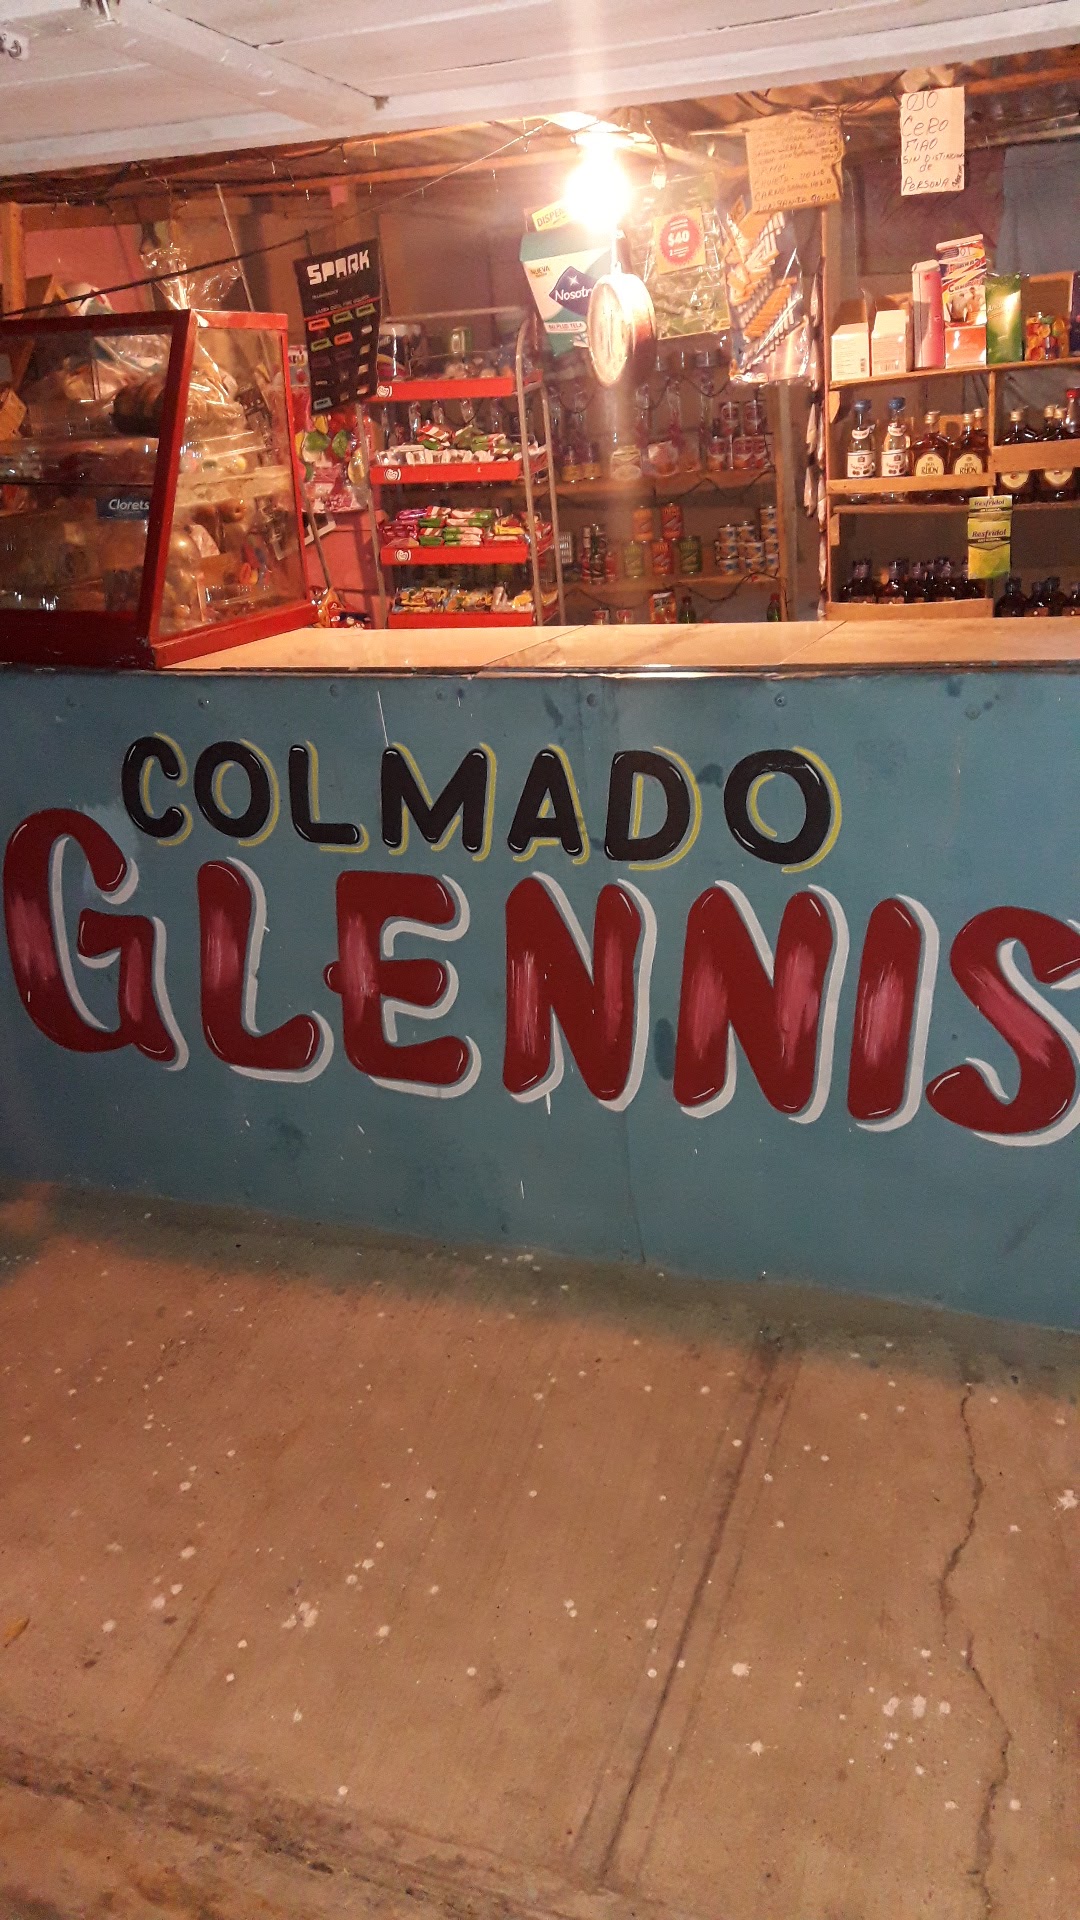 Colmado Glennis